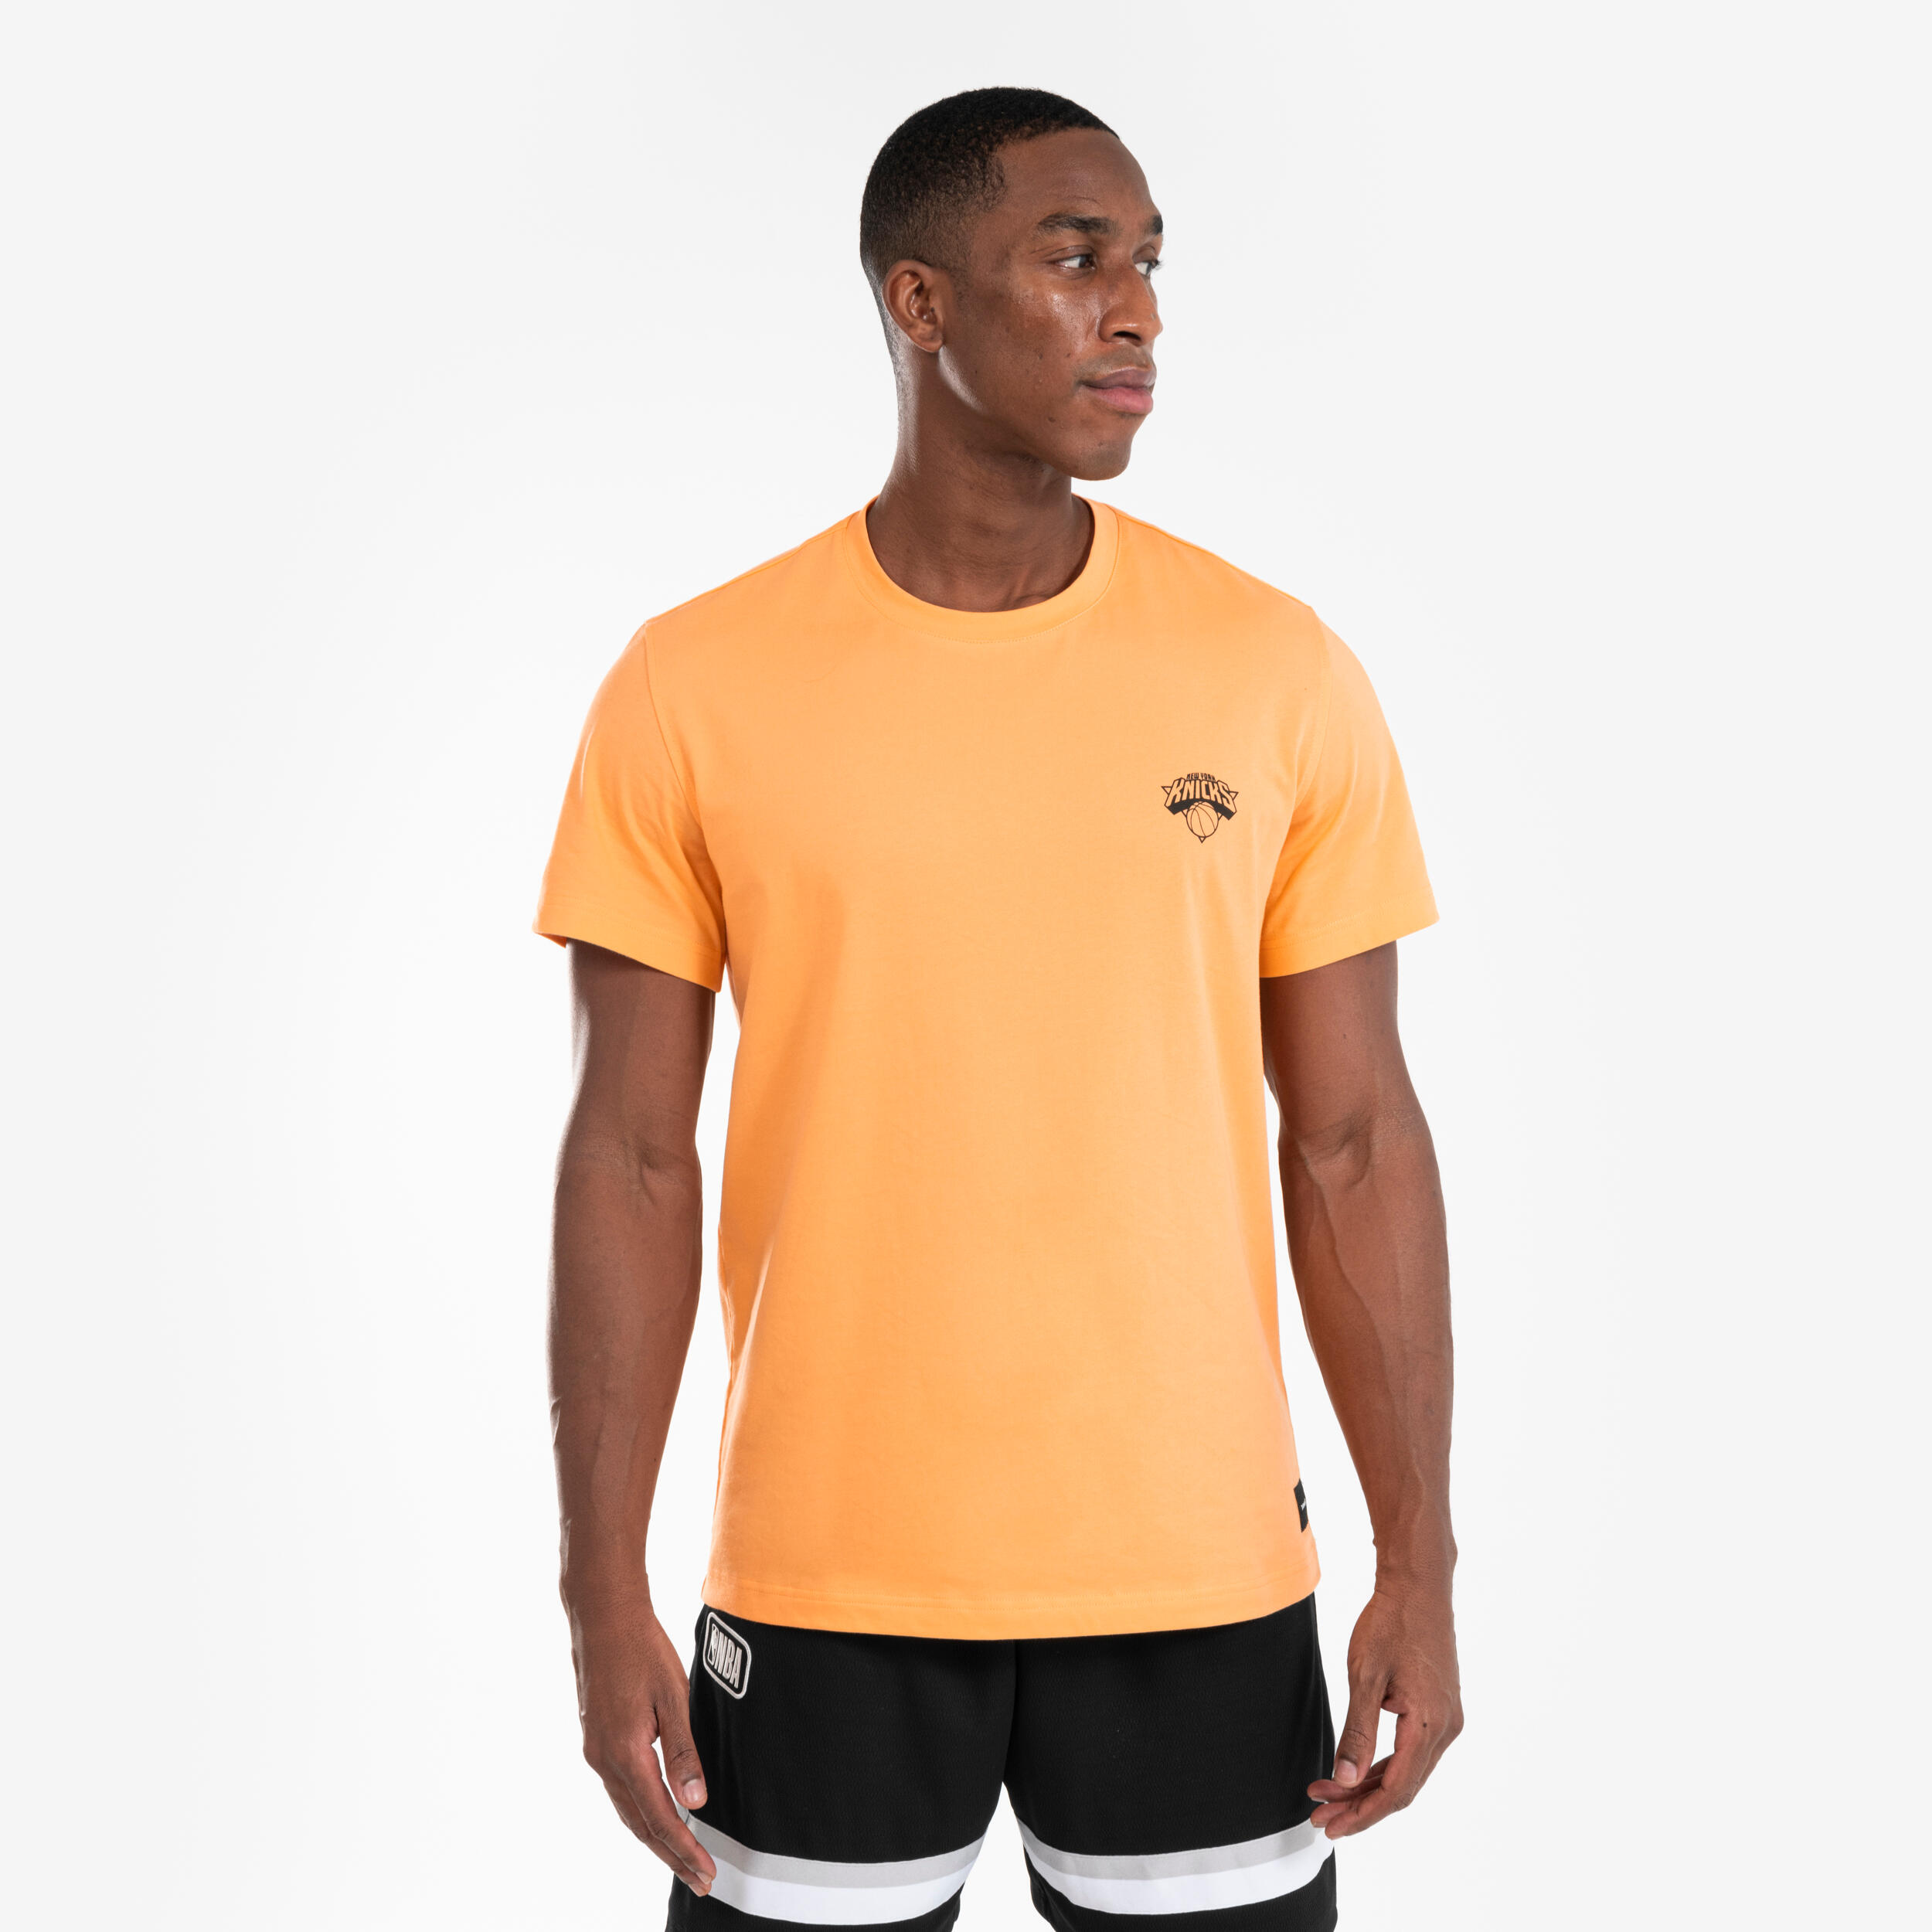 Unisex Basketball T-Shirt 900 AD - NBA Knicks/Orange 3/8